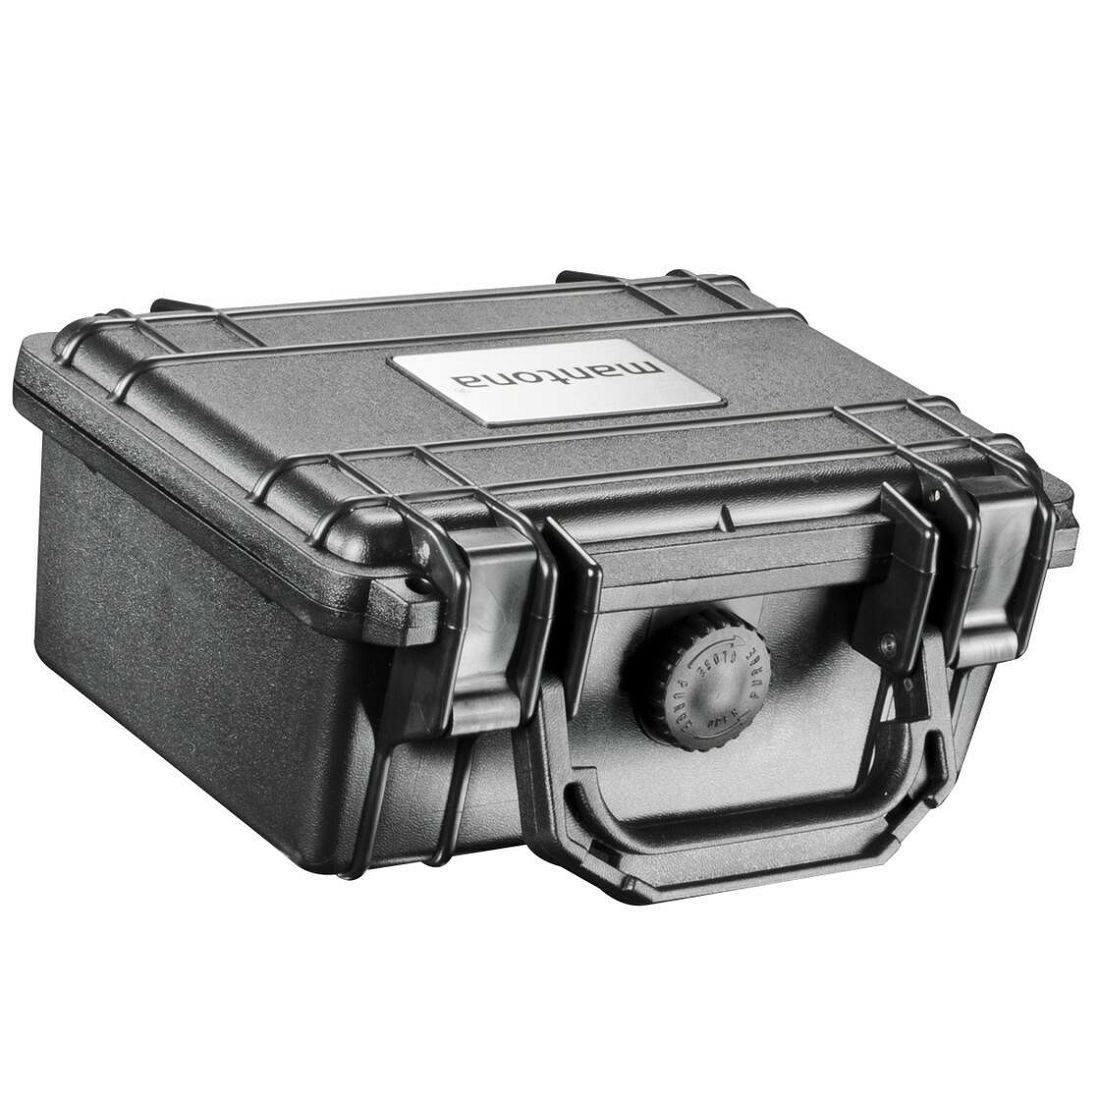 Mantona Outdoor Protective Case S Small Black crni kufer za foto opremu kofer